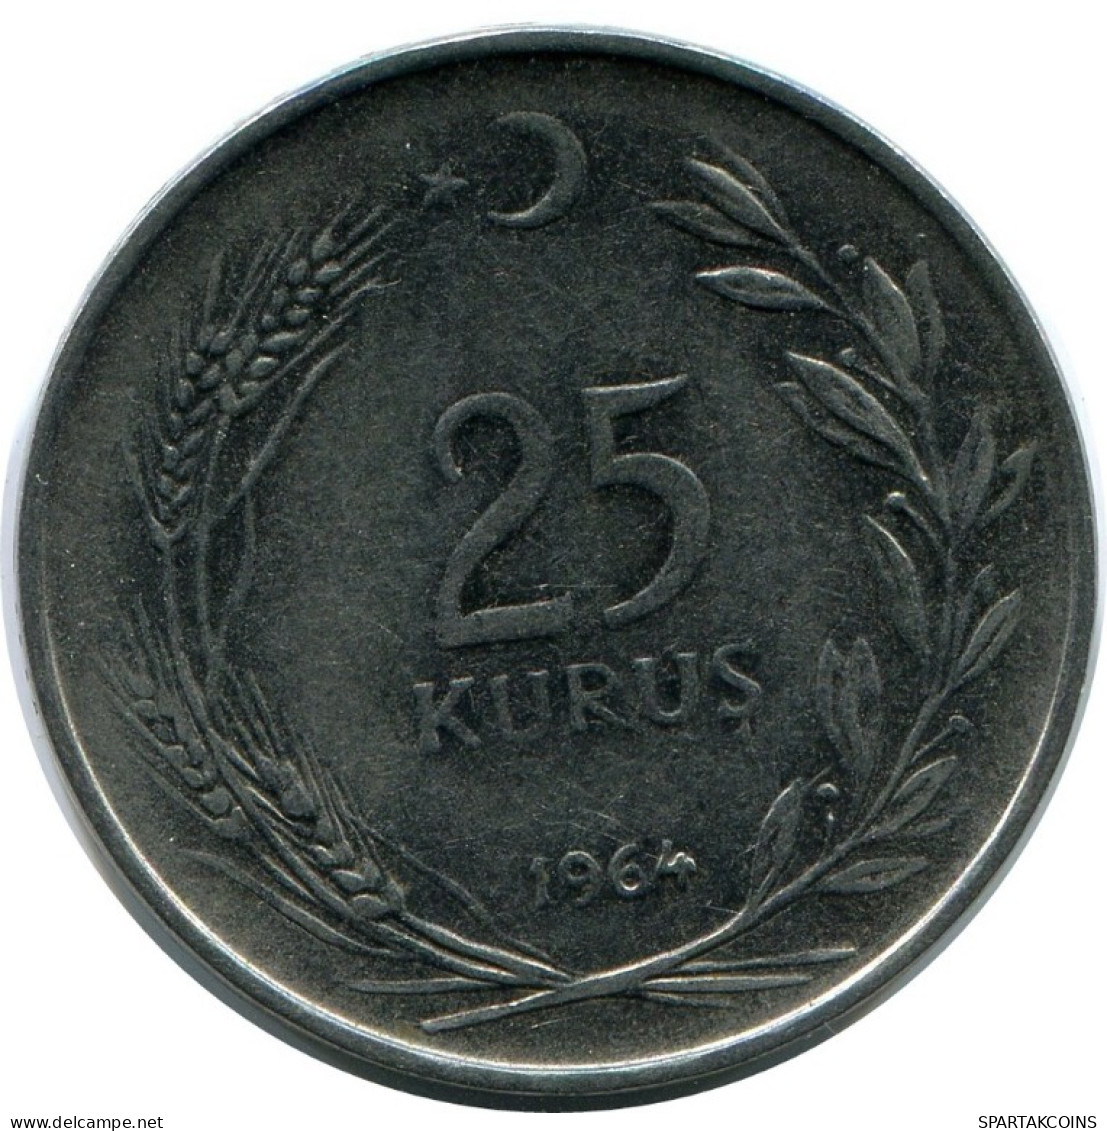 25 KURUS 1964 TURKEY Coin #AH819.U.A - Turquia